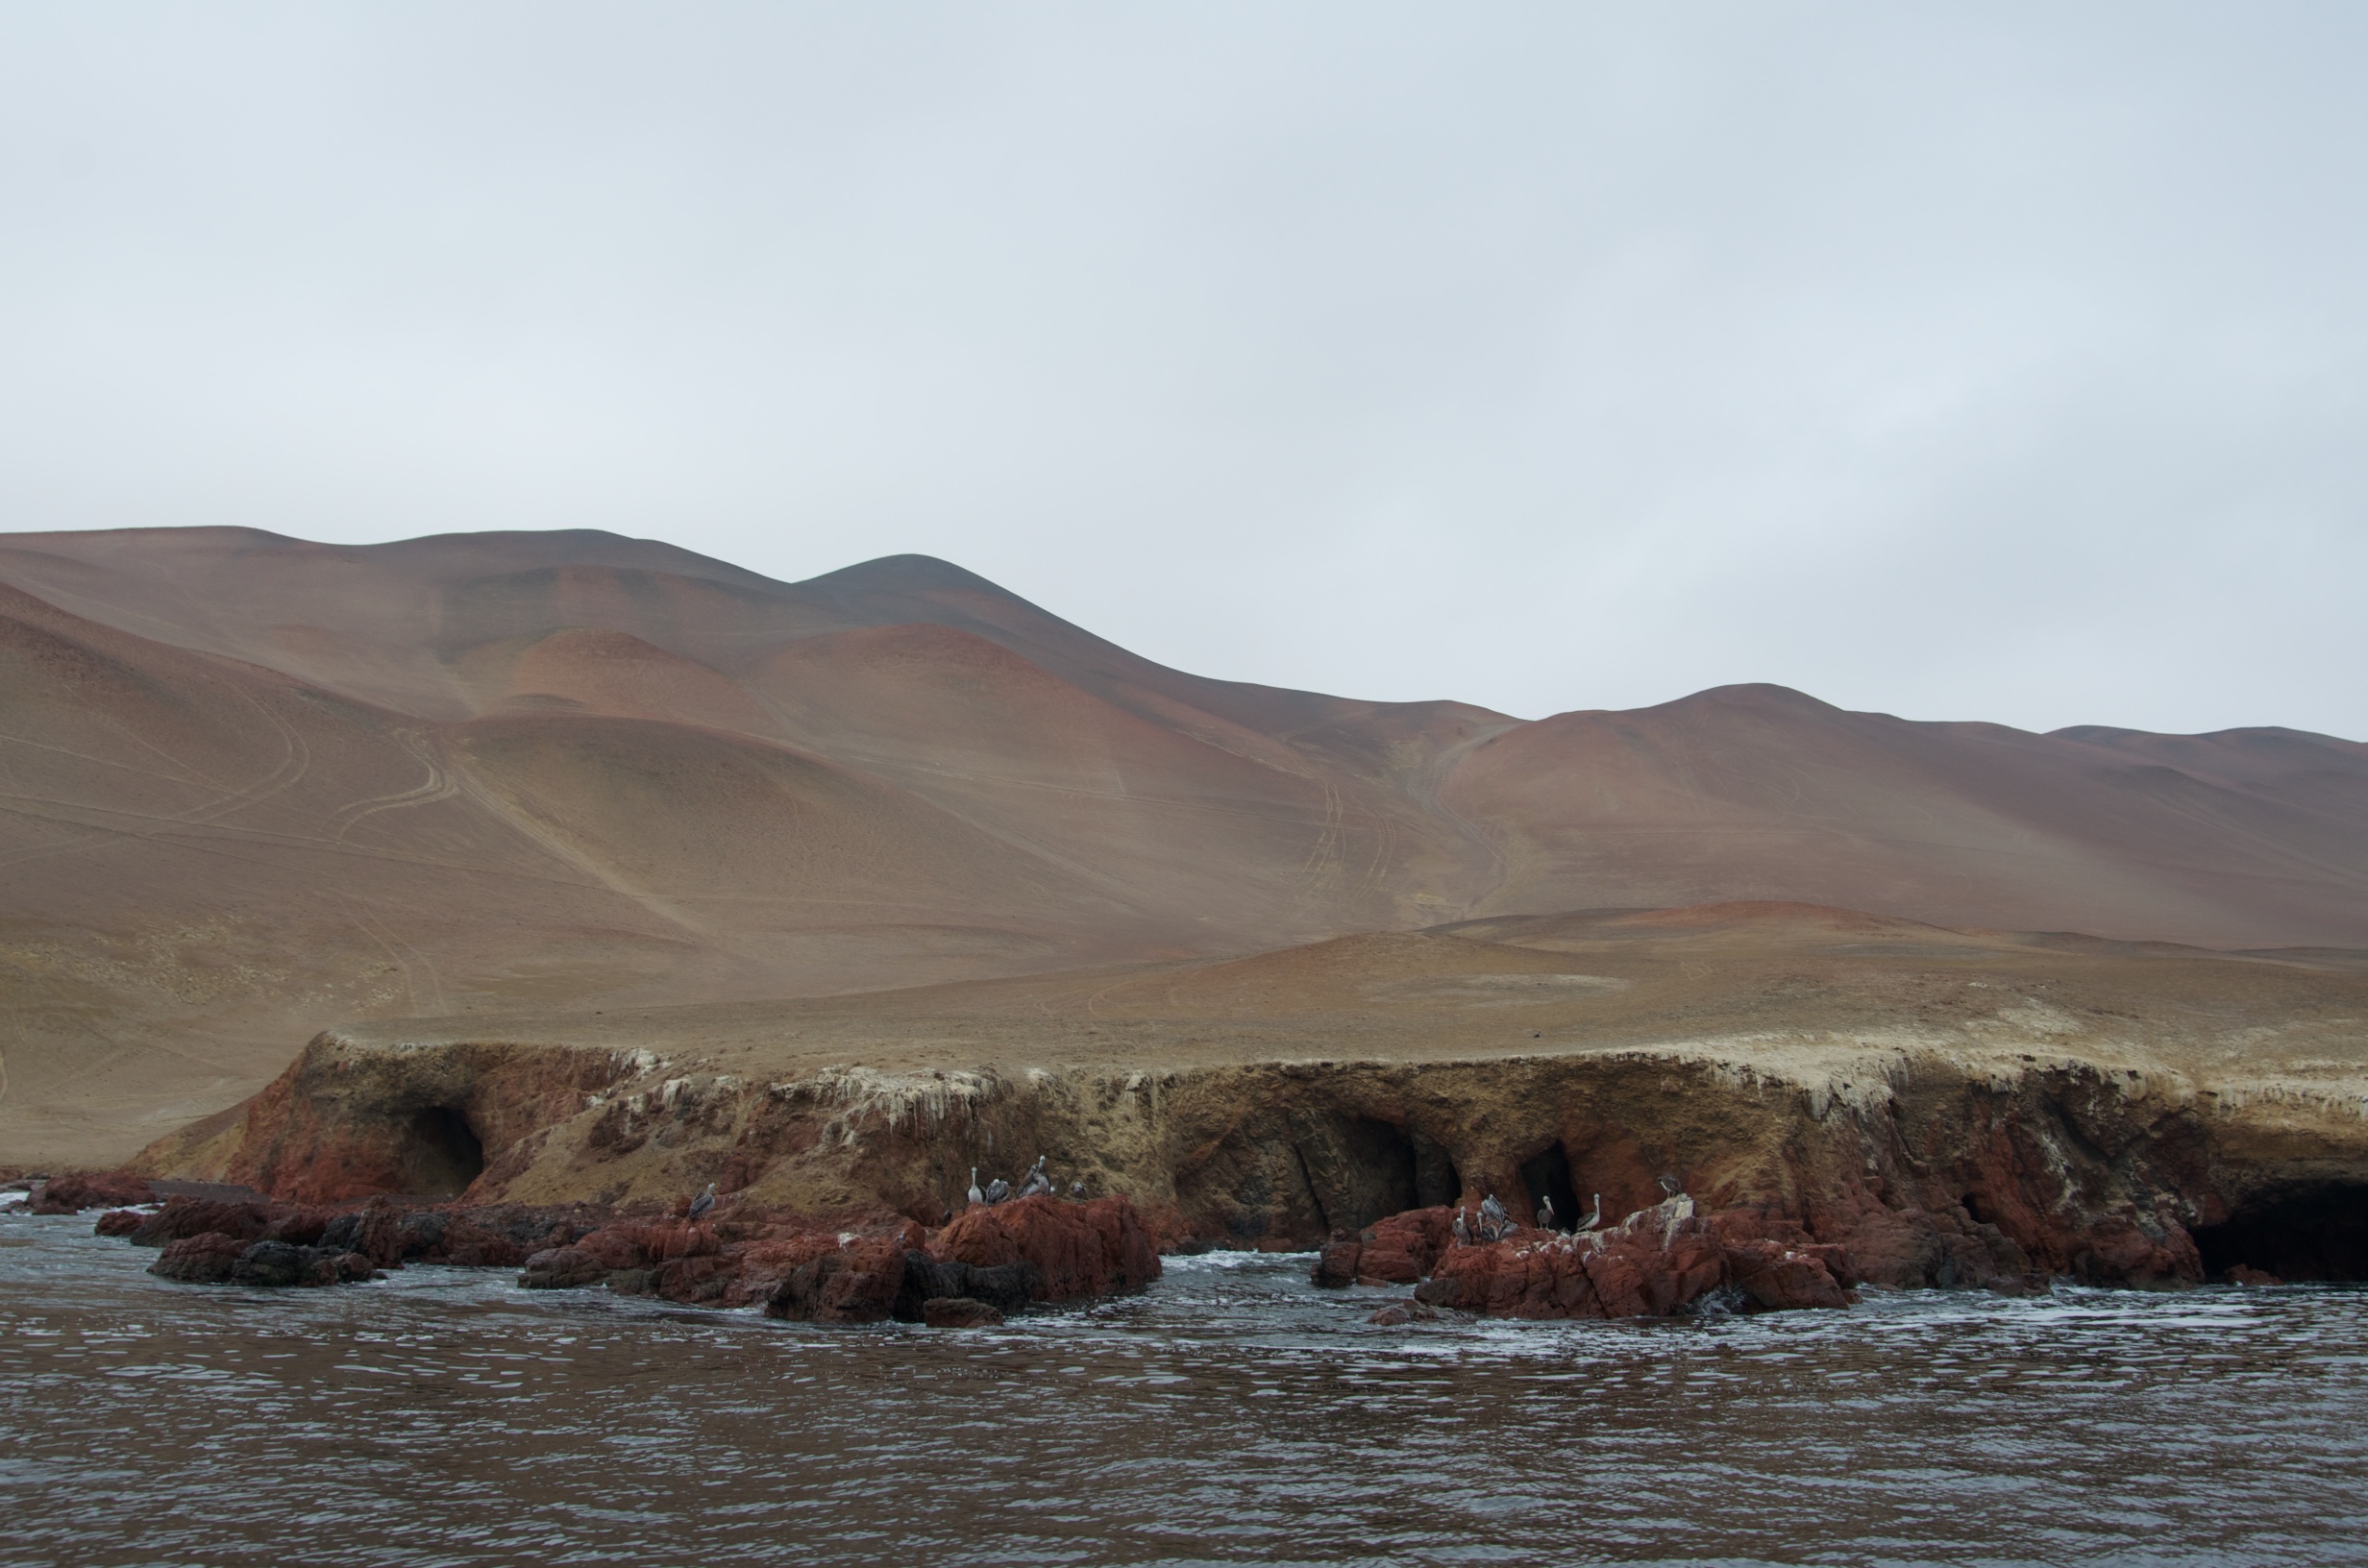  Ballestas Islands, Peru 